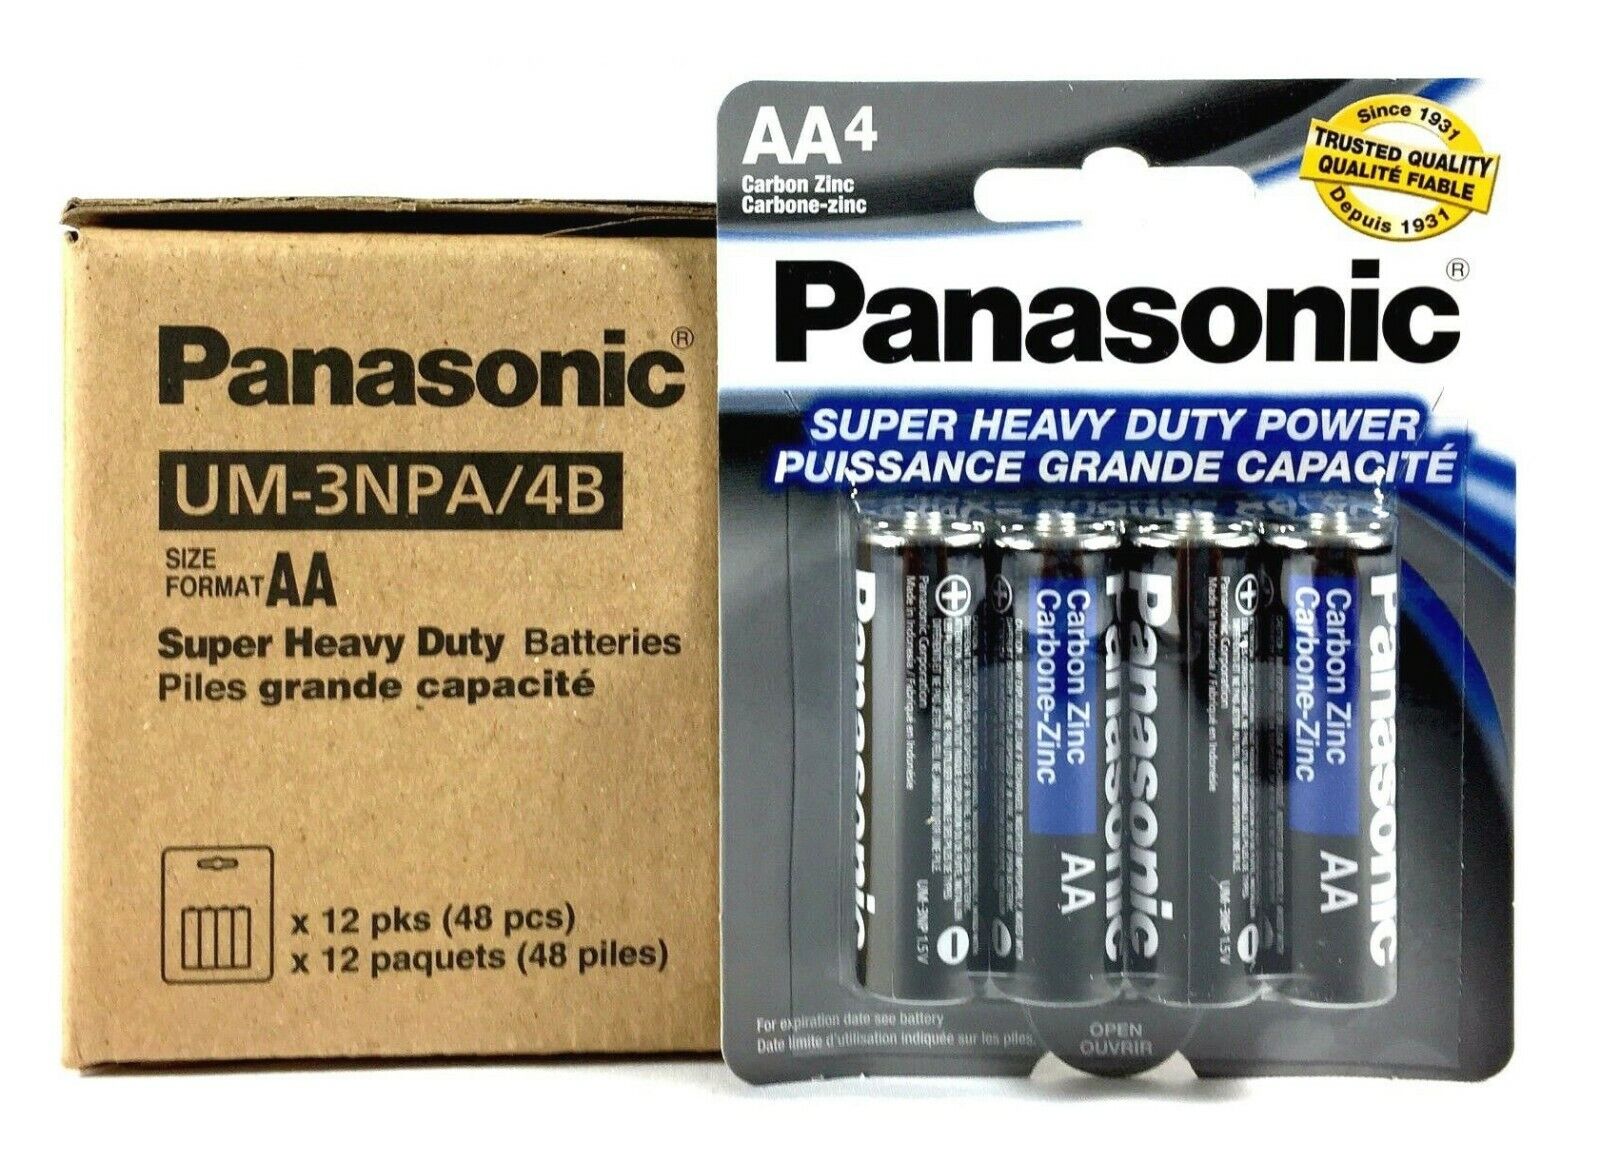 8x Panasonic AA 1.5V Batteries Heavy Duty Power Carbon Zinc Double A Battery Panasonic UM-3NPA/4B